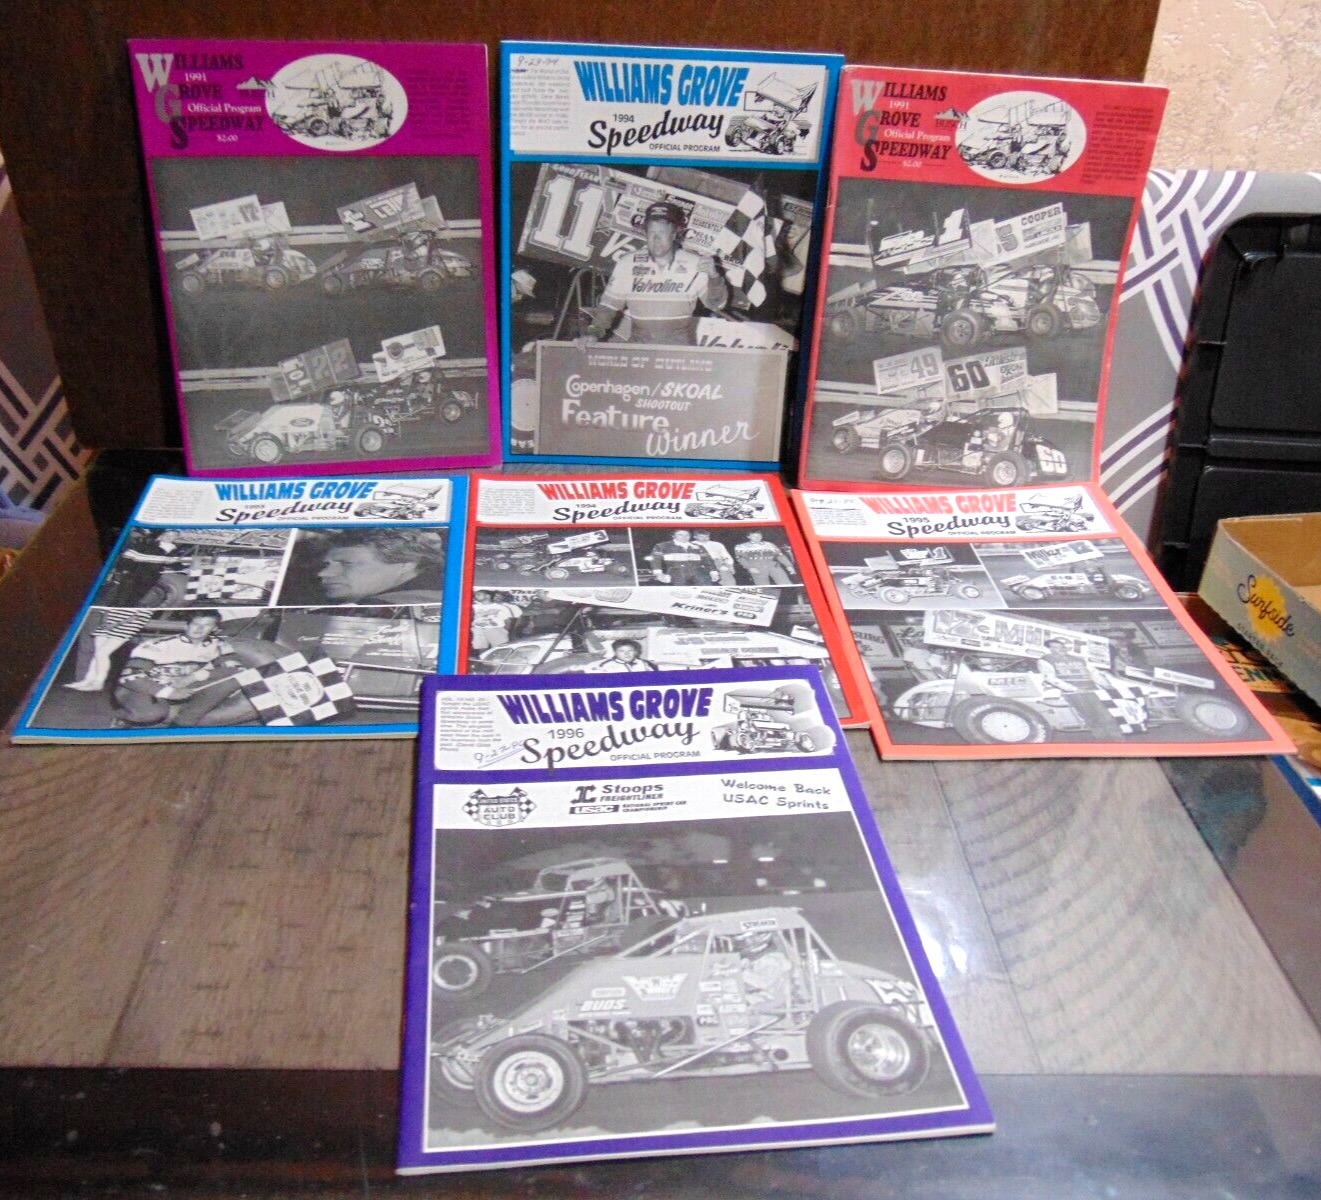 7 Vintage Williams Grove Speedway Books  1991 - 1993 - 1994 - 1995 - 1996